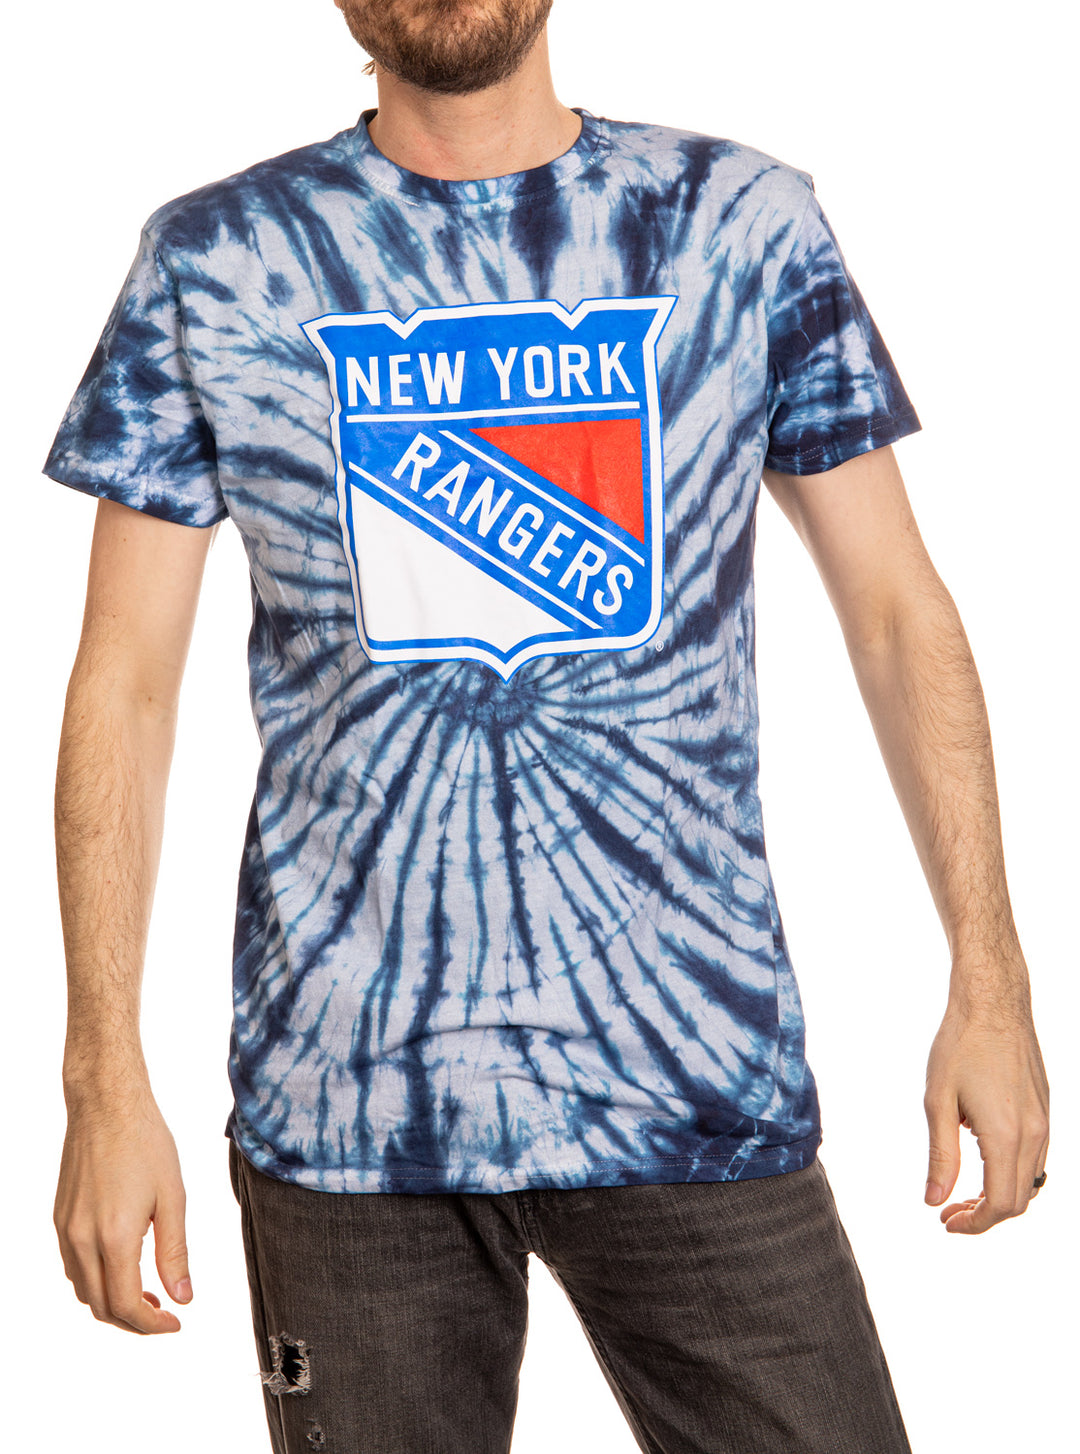 Copy of New York Rangers Spiral Tie Dye T-Shirt for Men